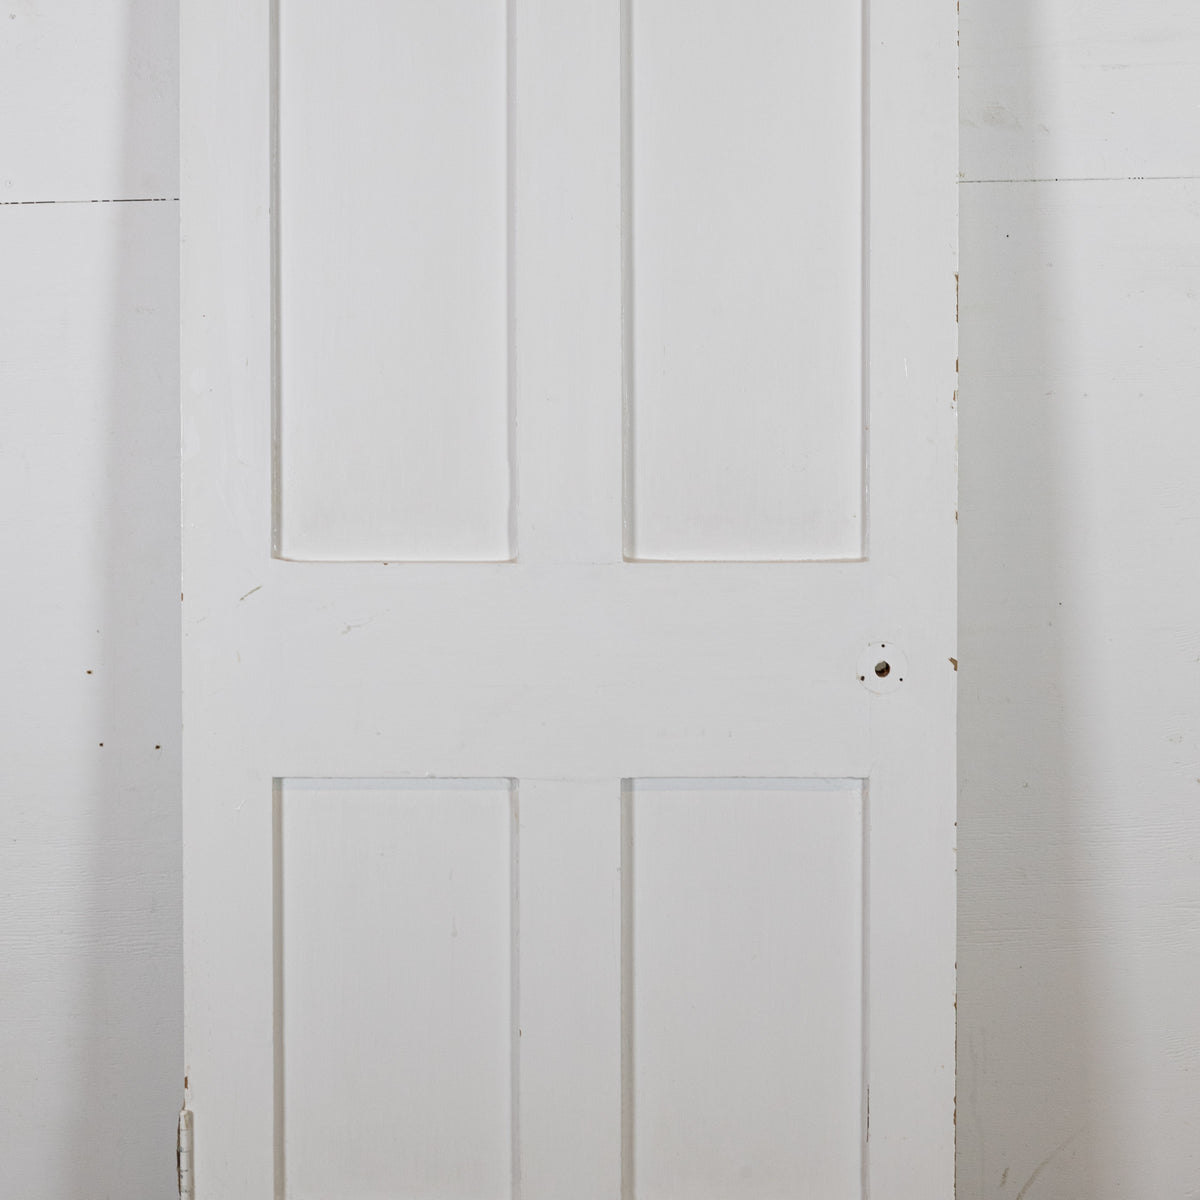 Antique Victorian 4 Panel Door - 198 x 81cm | The Architectural Forum